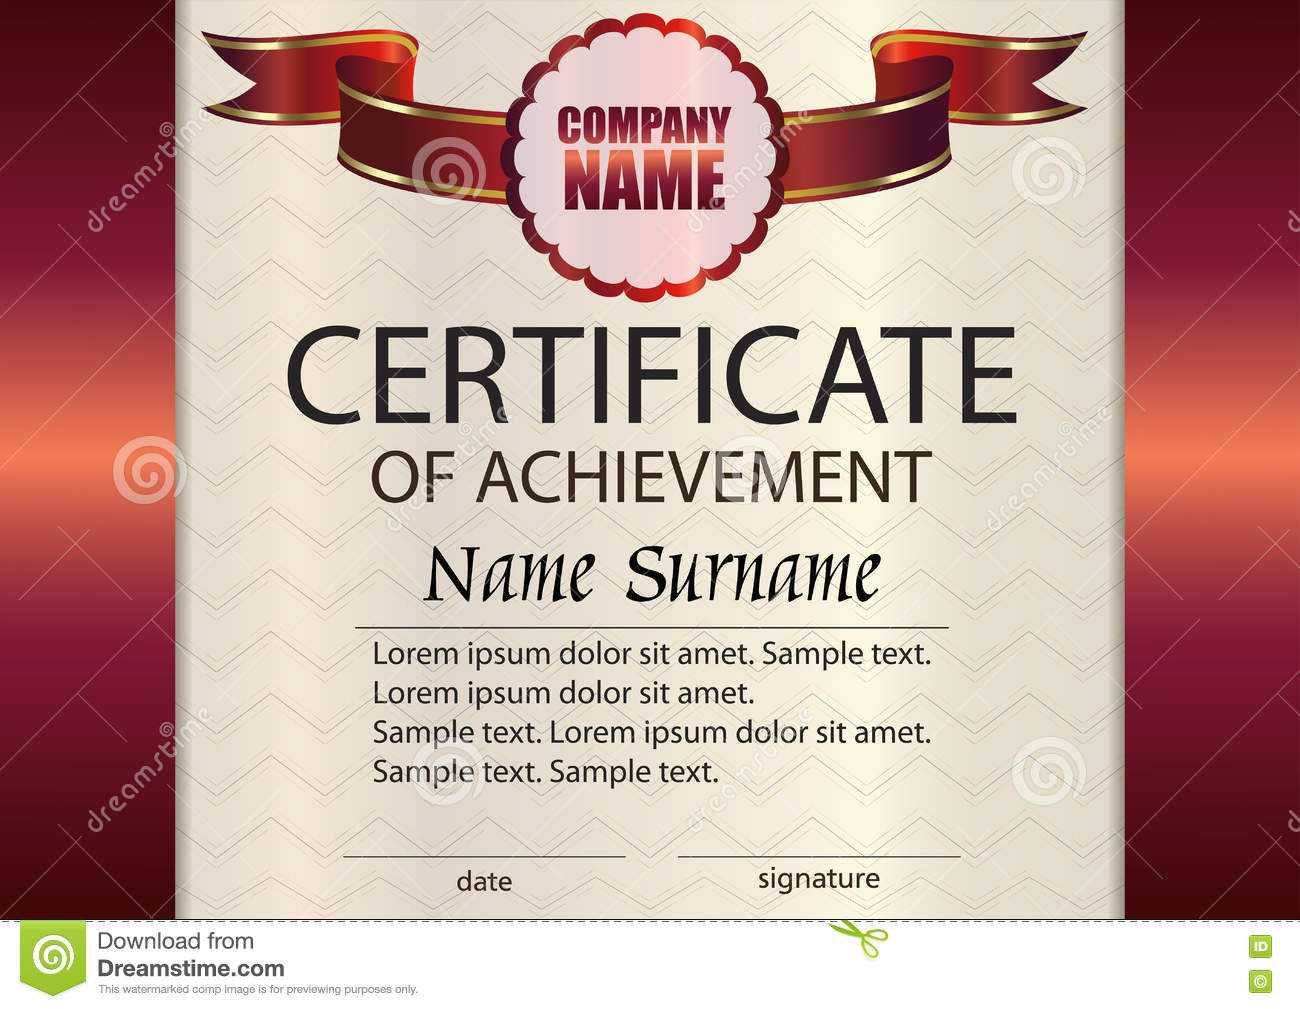 Vector Certificate Of Achievement Template. Award Winner In Certificate Of Attainment Template